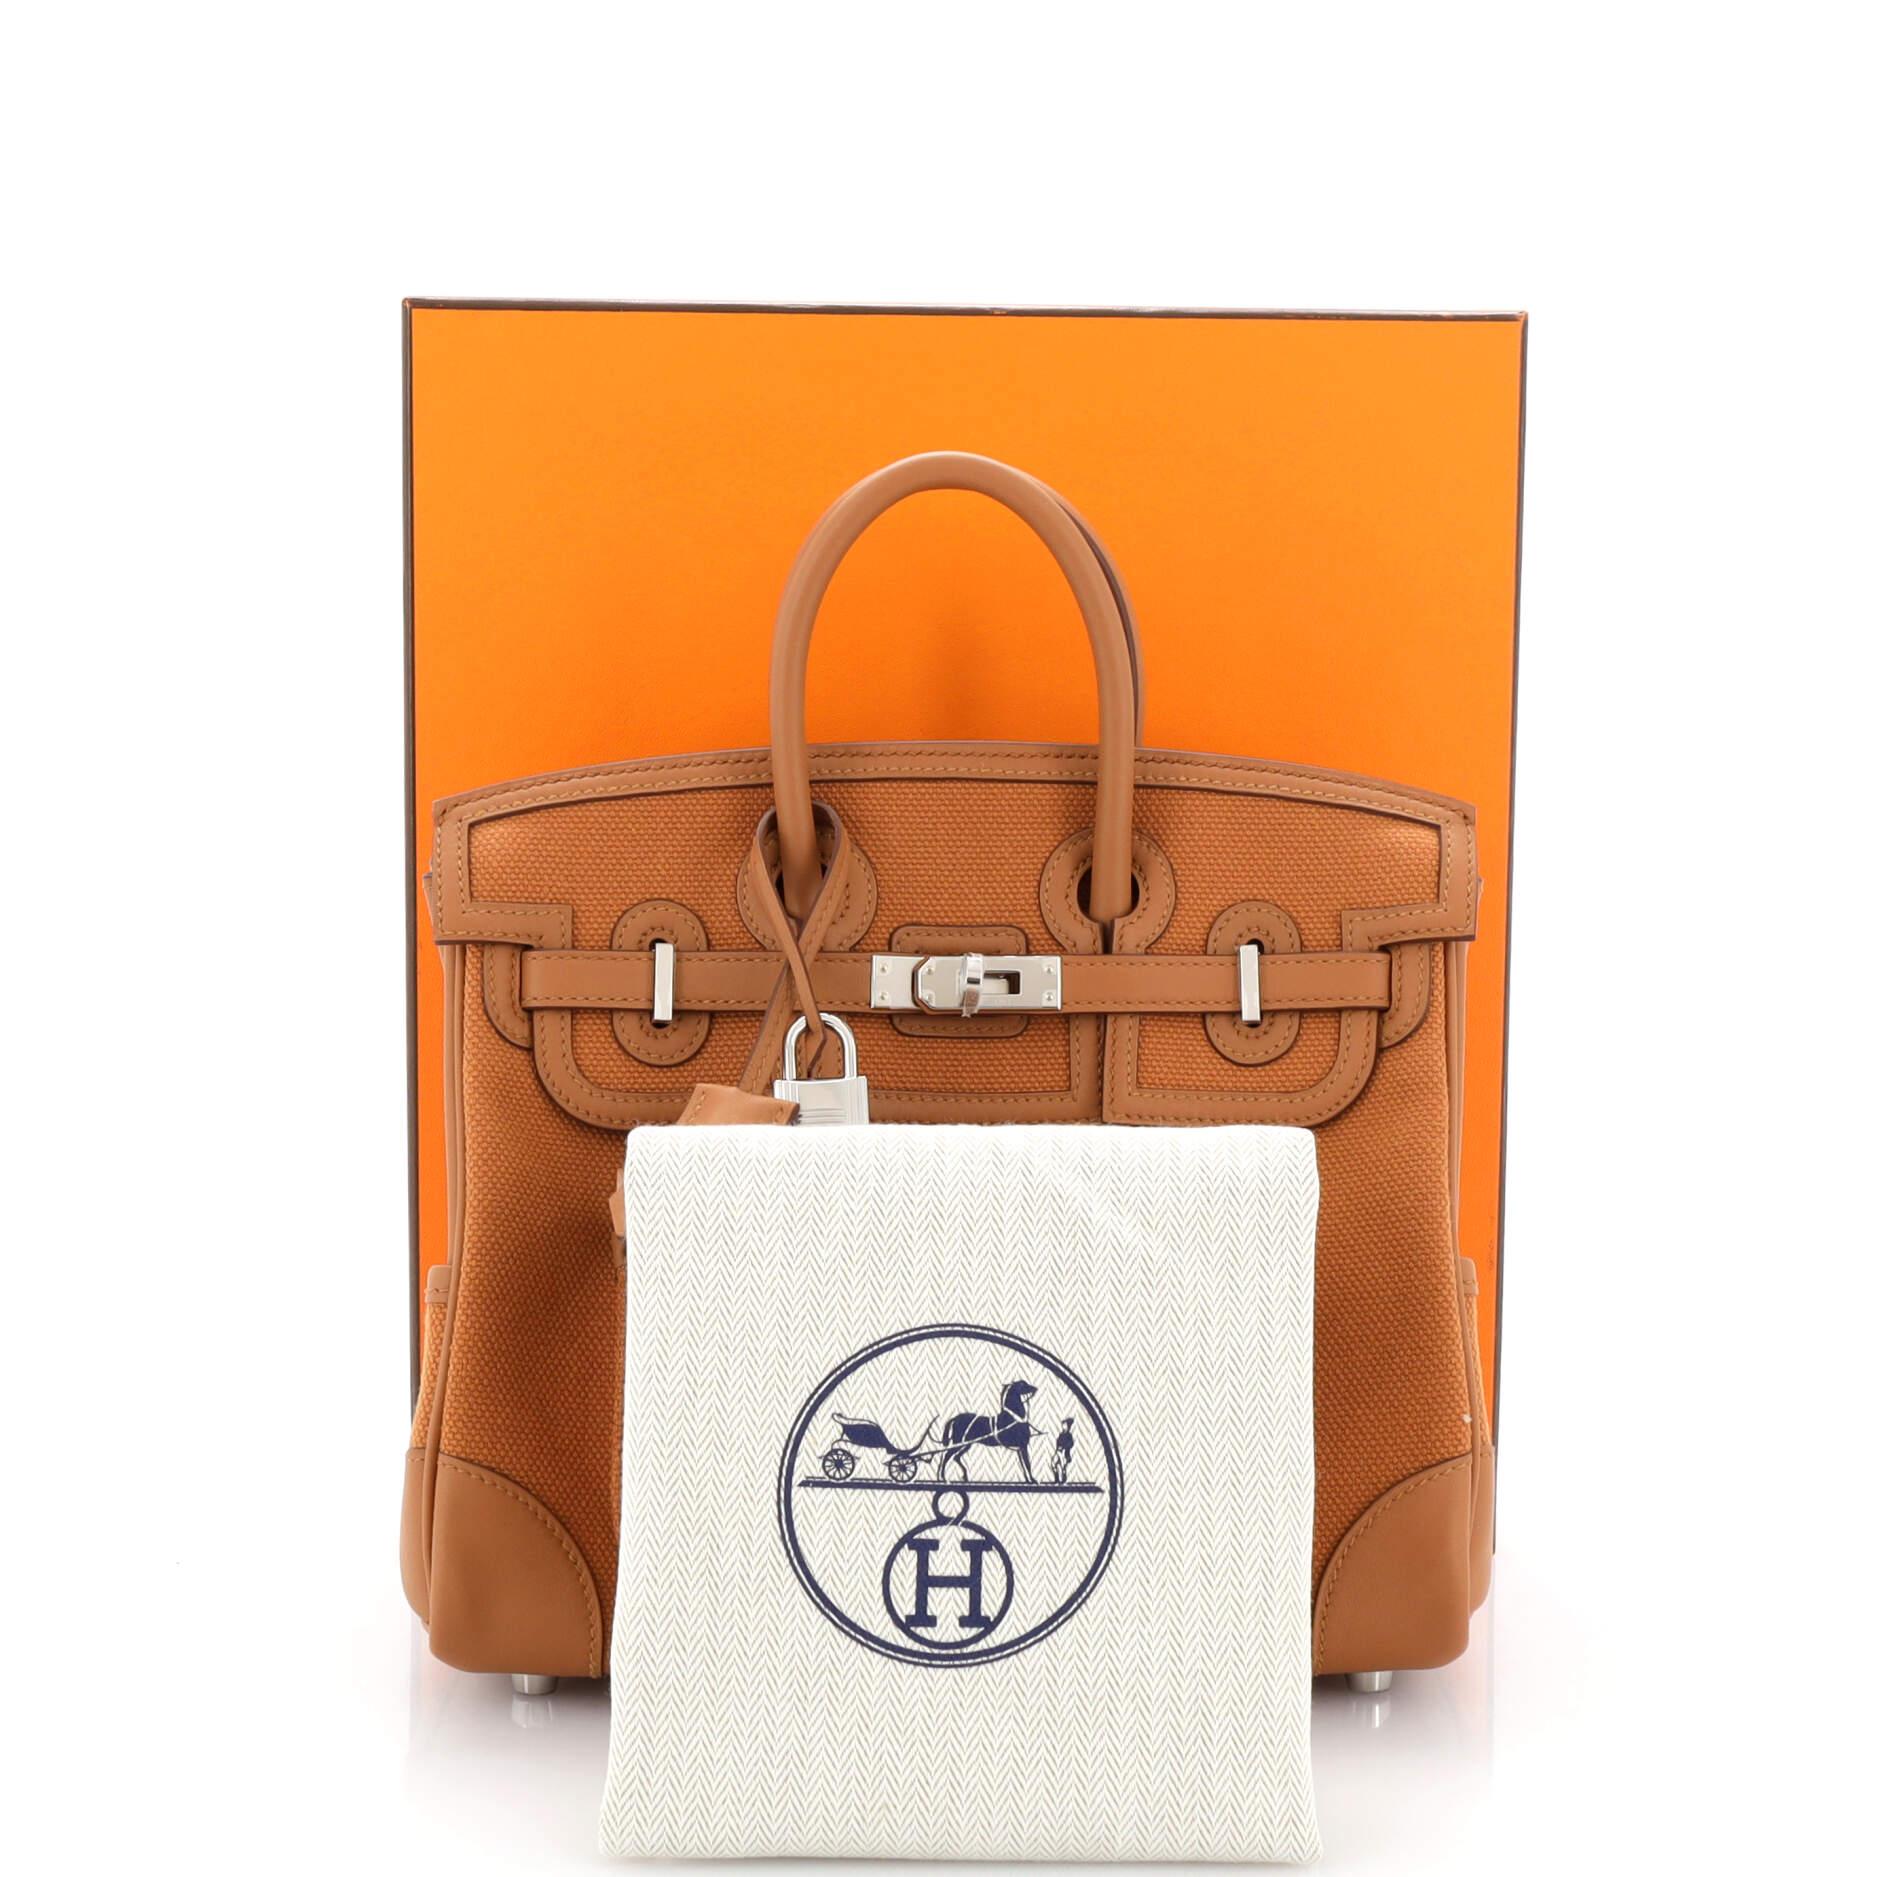 Hermes Limited Edition Birkin 35 Bag Cargo Sesame Toile Goeland